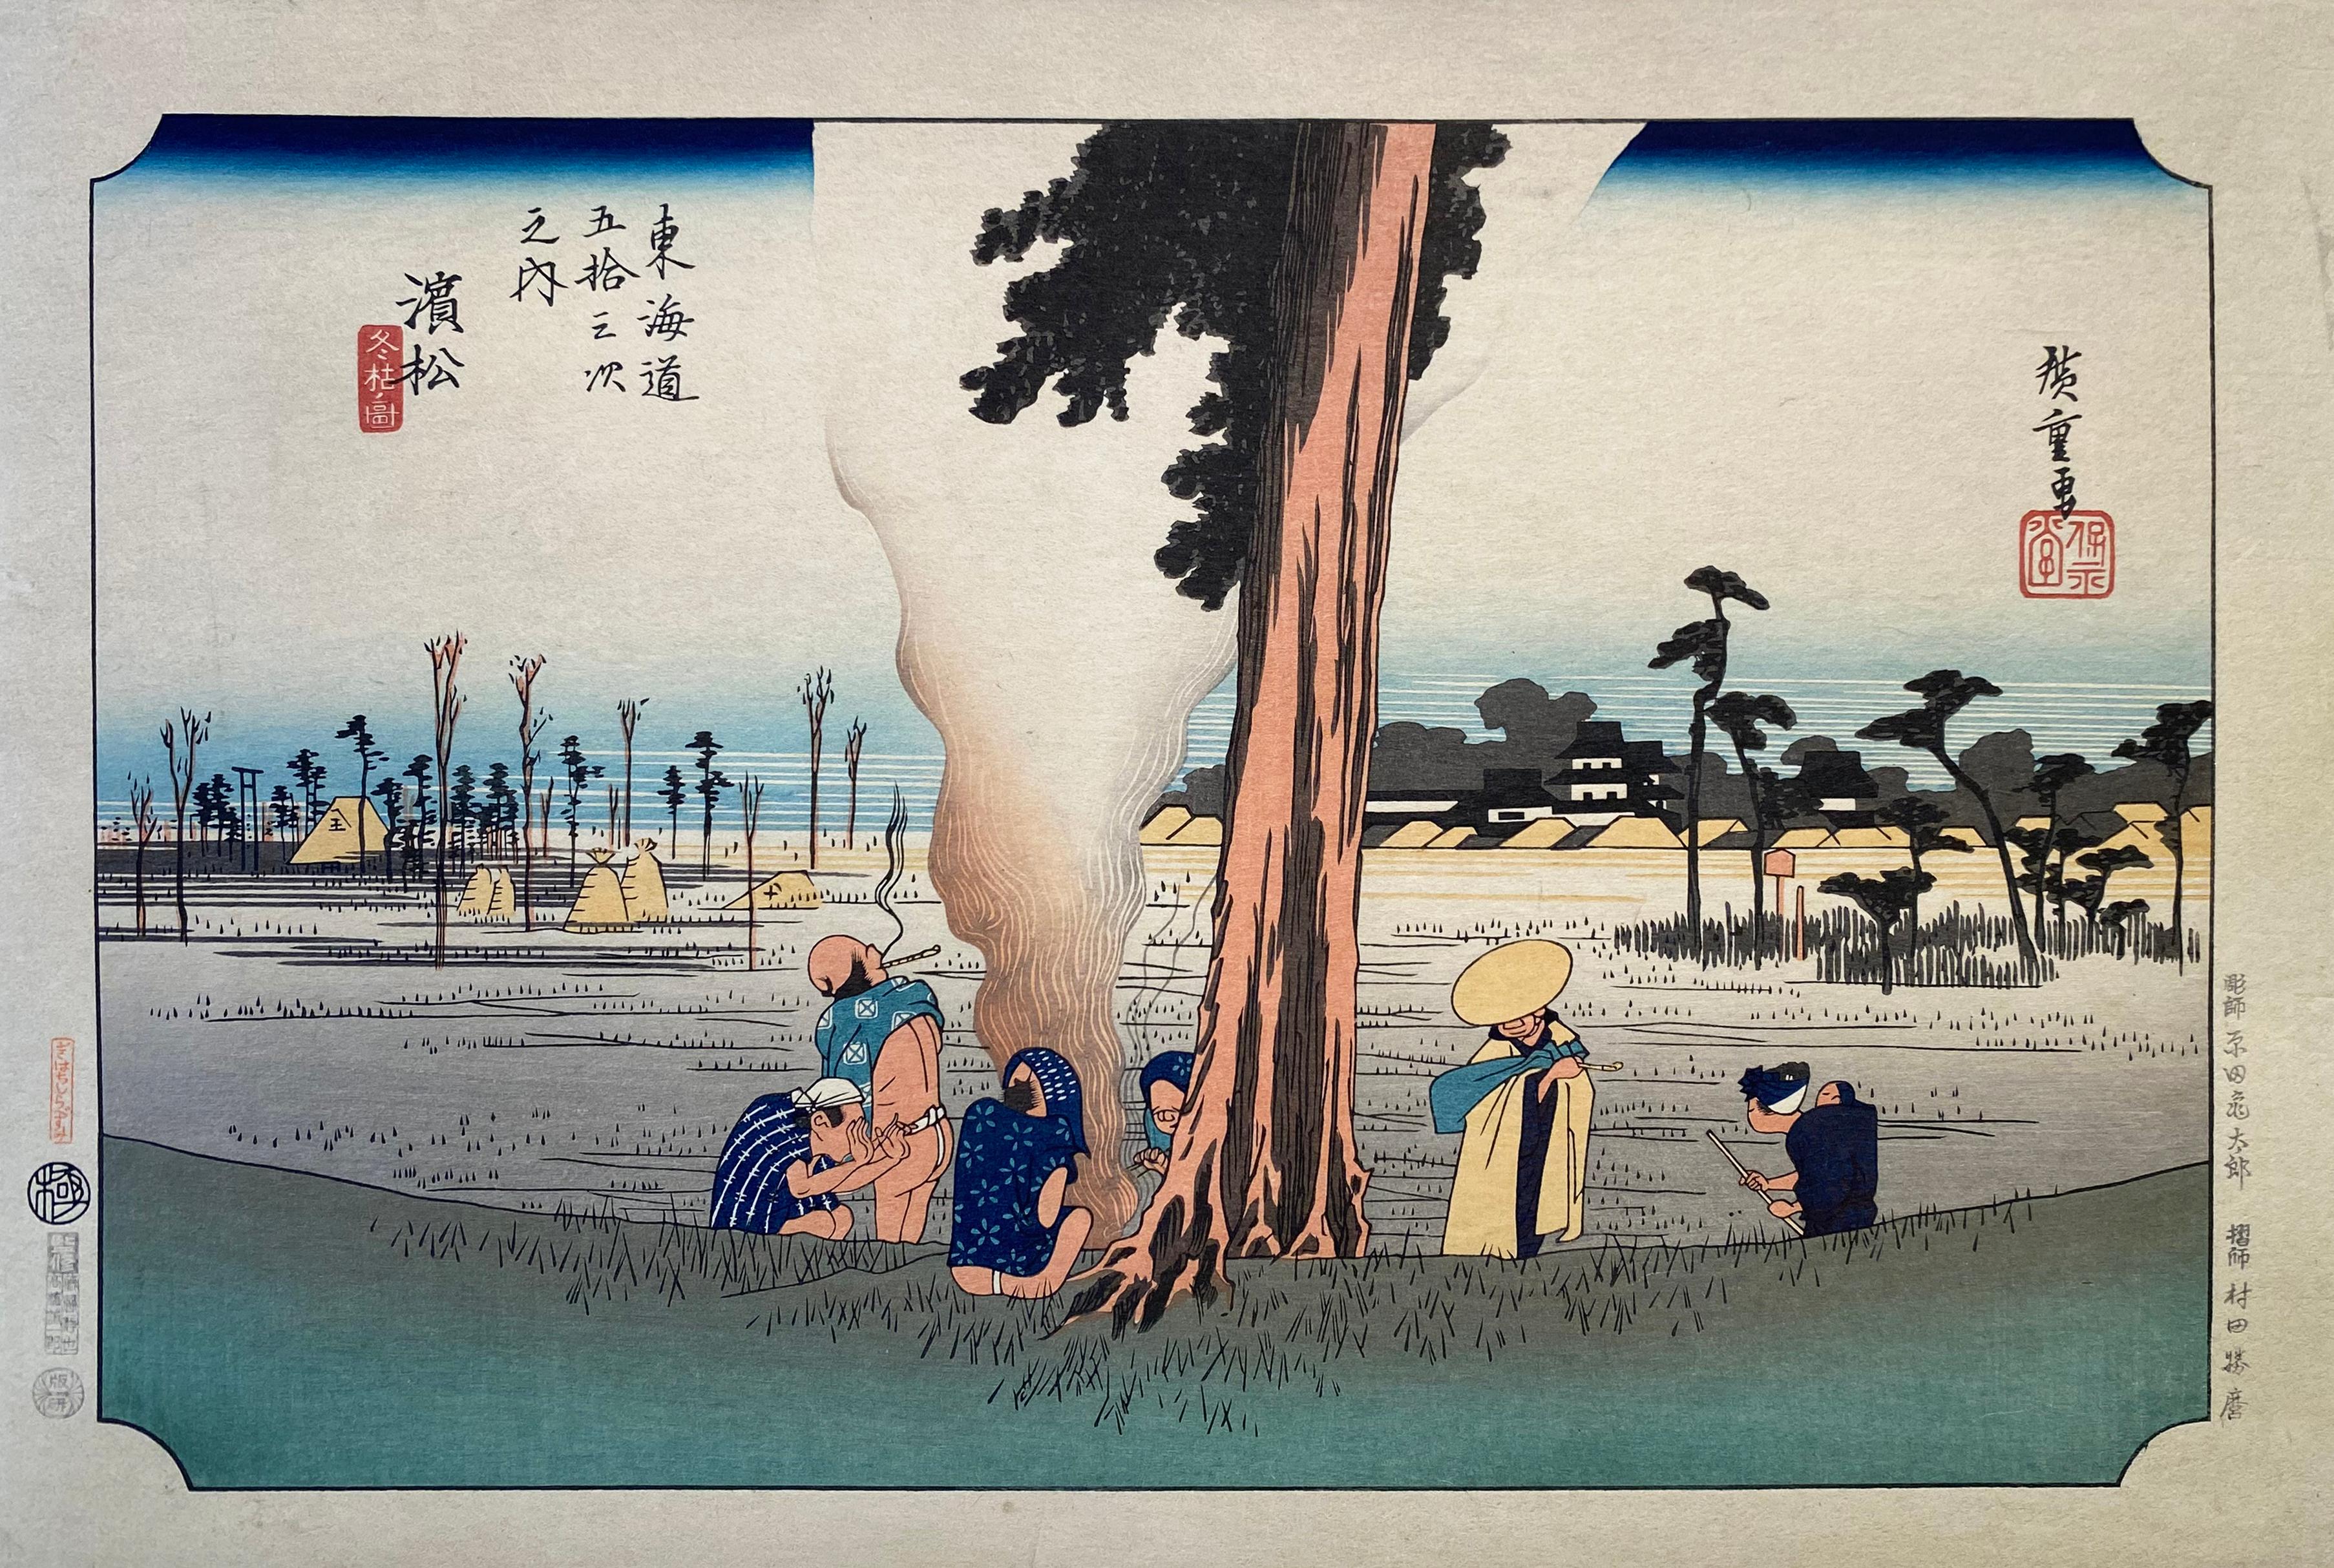 'View of Hamamatsu', After Utagawa Hiroshige 歌川廣重, Ukiyo-e Woodblock, Tokaido